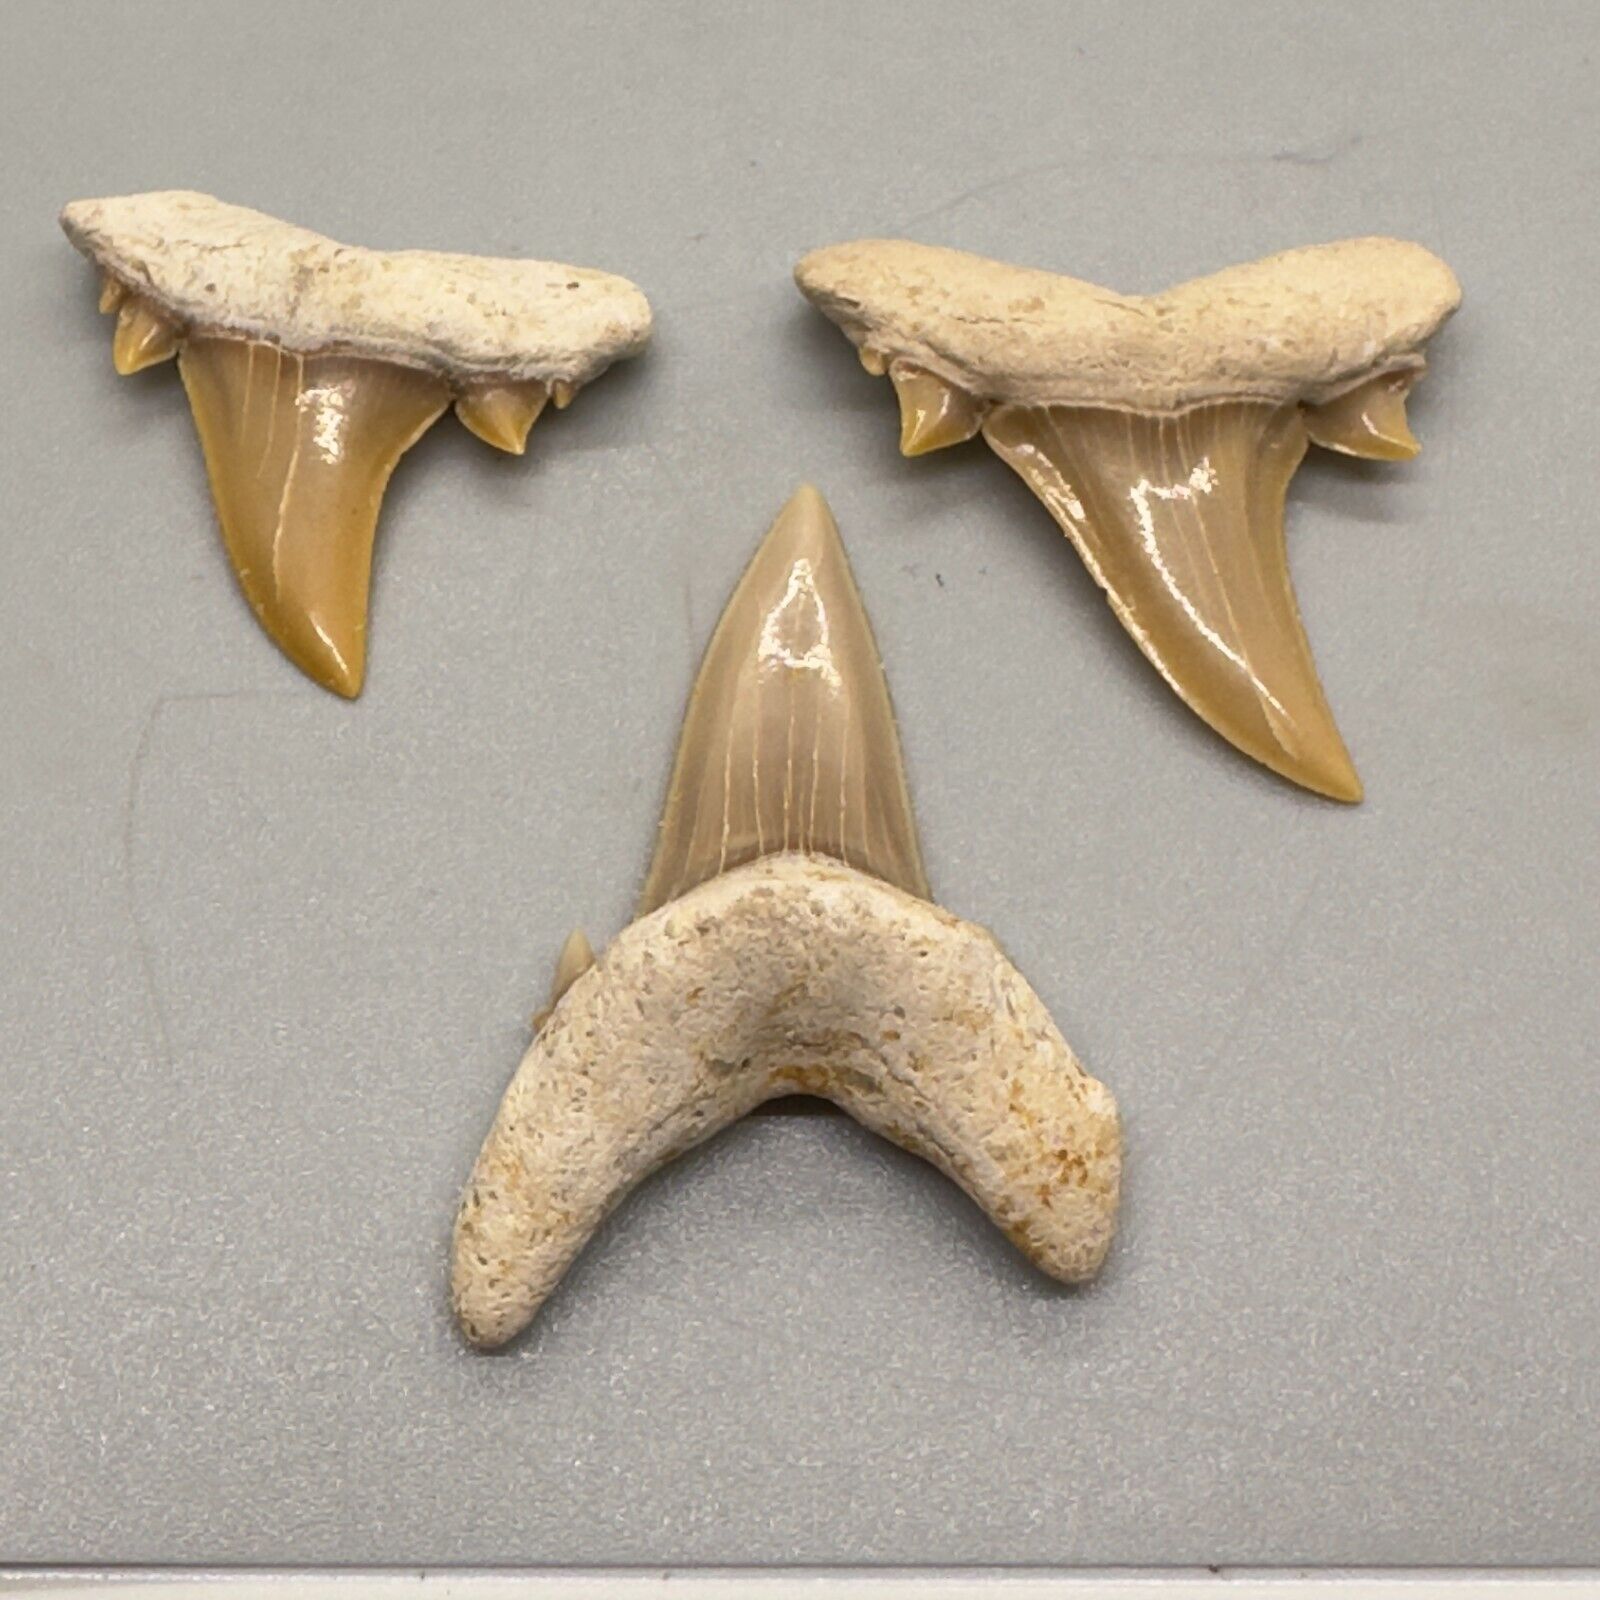 Group - 3 High Quality Fossil SERRATOLAMNA KOERTI Shark Teeth - Western Sahara